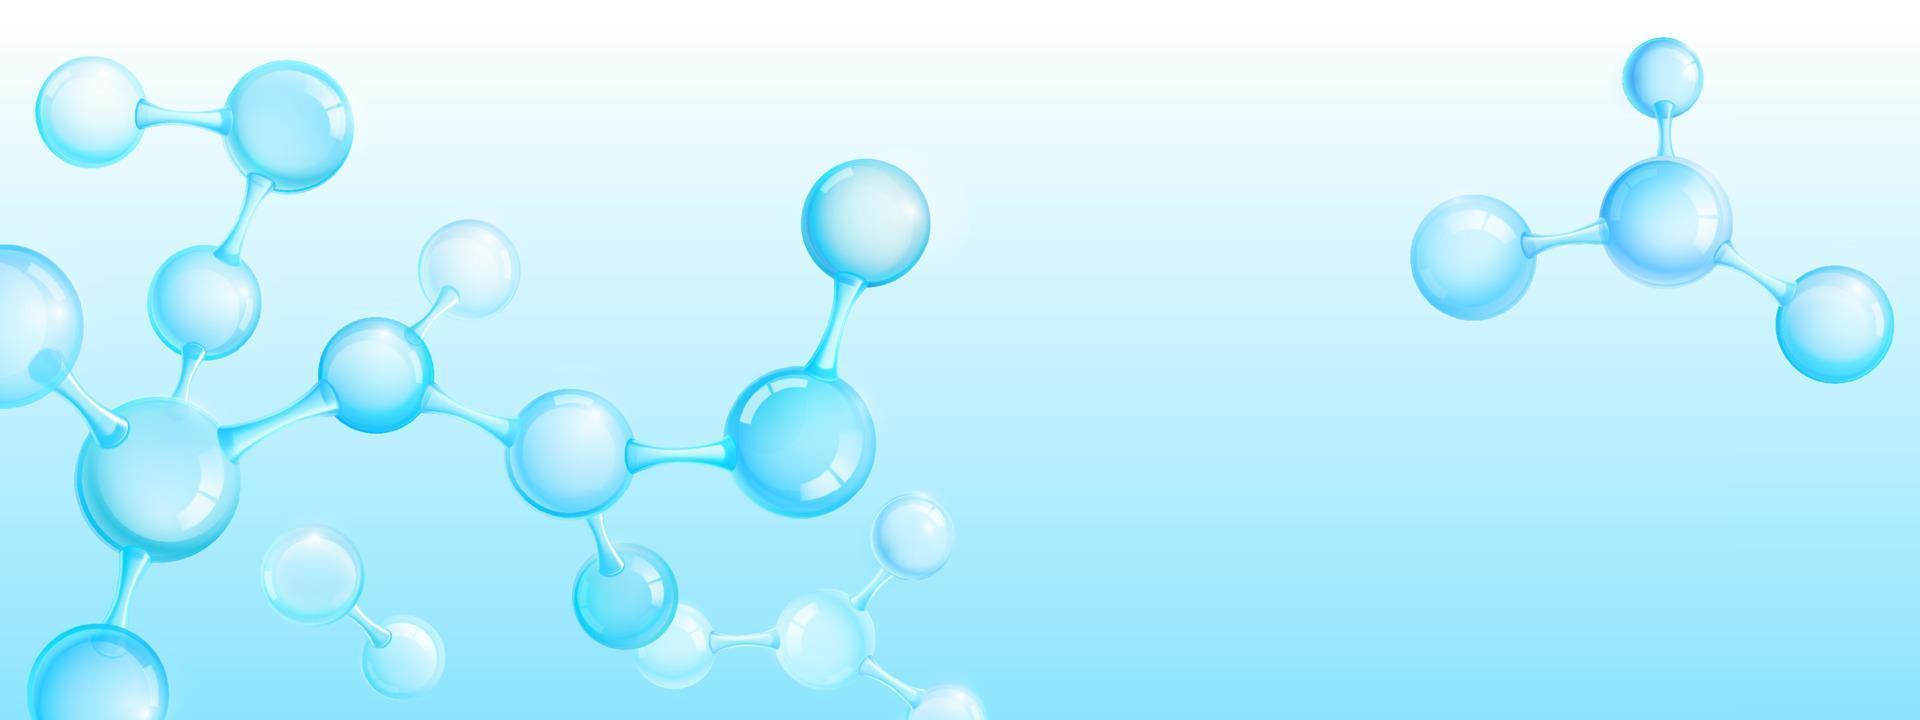 moléculas abstractas sobre fondo azul, vector